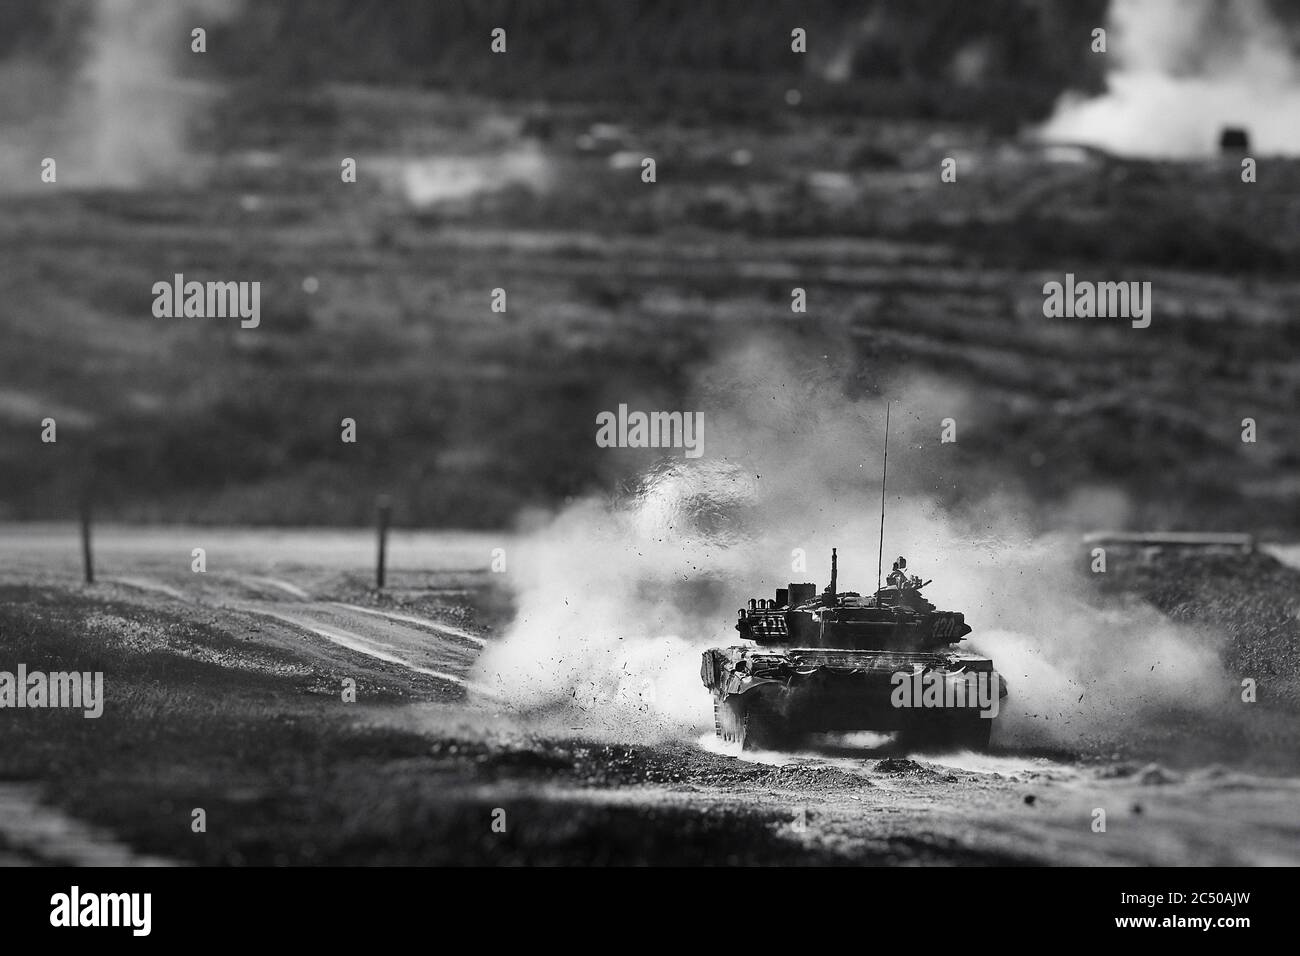 https://c8.alamy.com/comp/2C50AJW/shot-from-a-tank-russian-tank-shot-on-range-smoke-explosions-military-2C50AJW.jpg